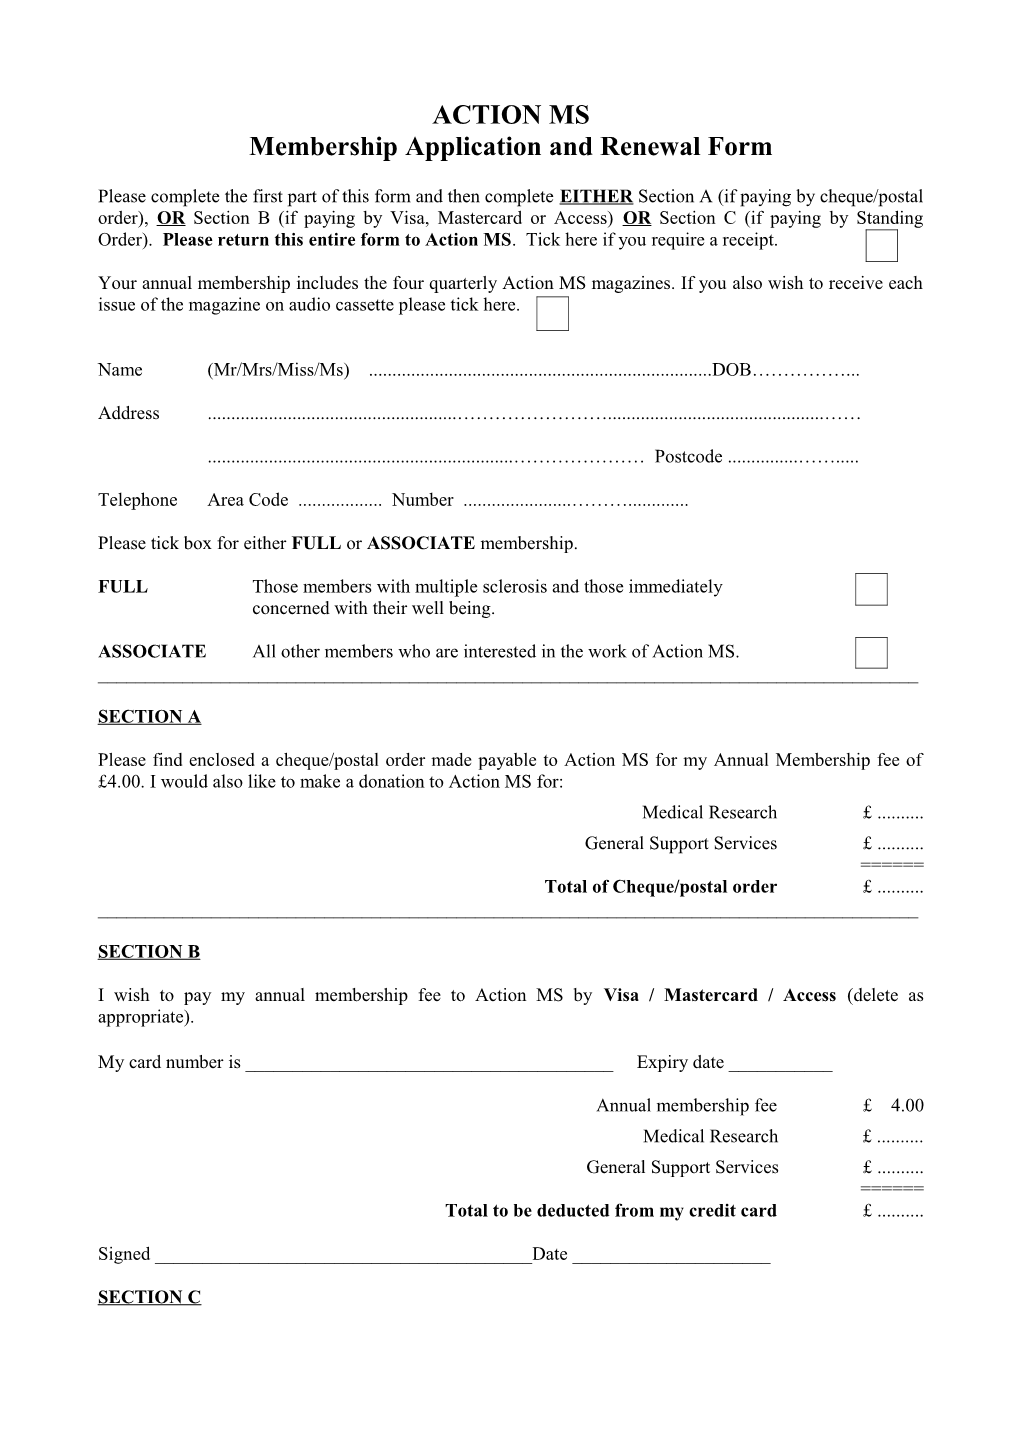 Membership Application and Renewal Form